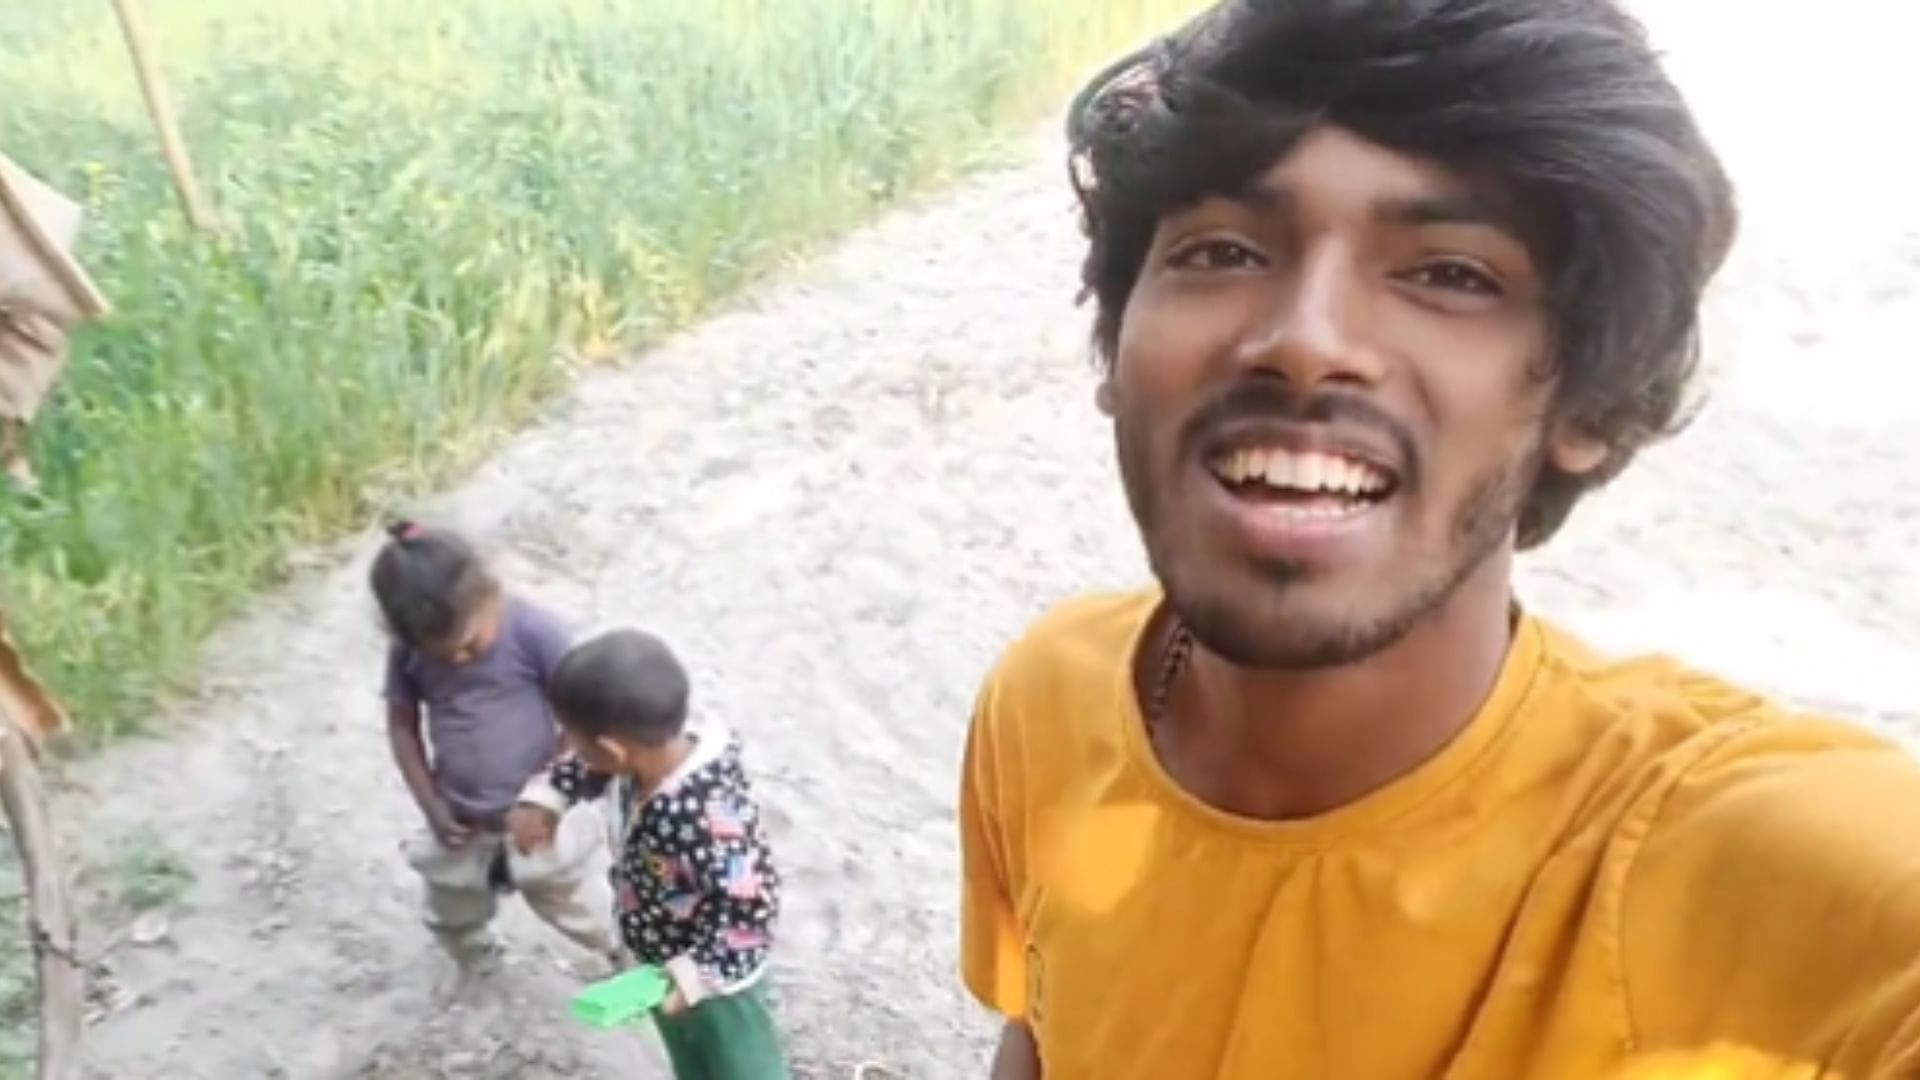 Sonu Sood came forward to help singer Amarjeet Jaykar of Bihar video went viral